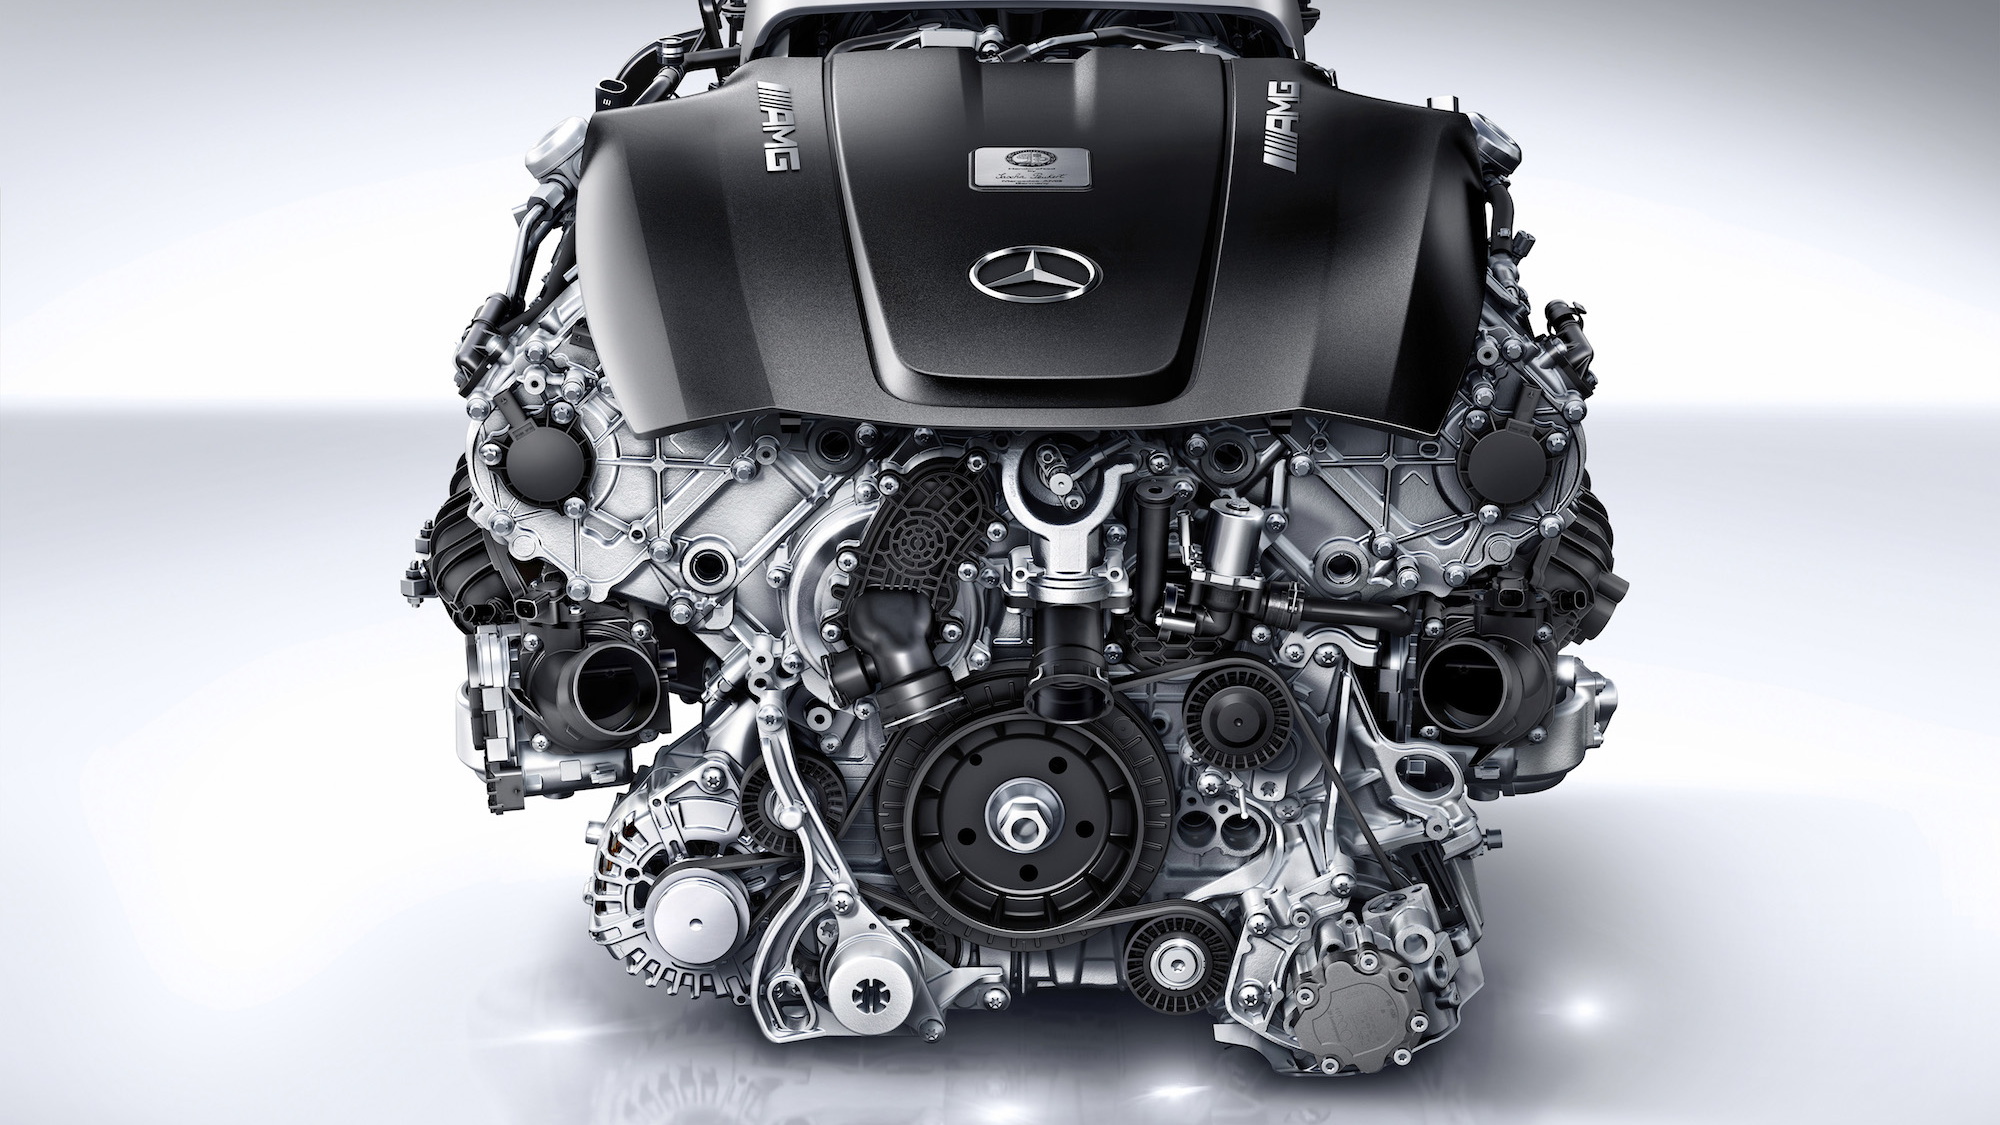 Mercedes-AMG M178 twin-turbo V-8 engine